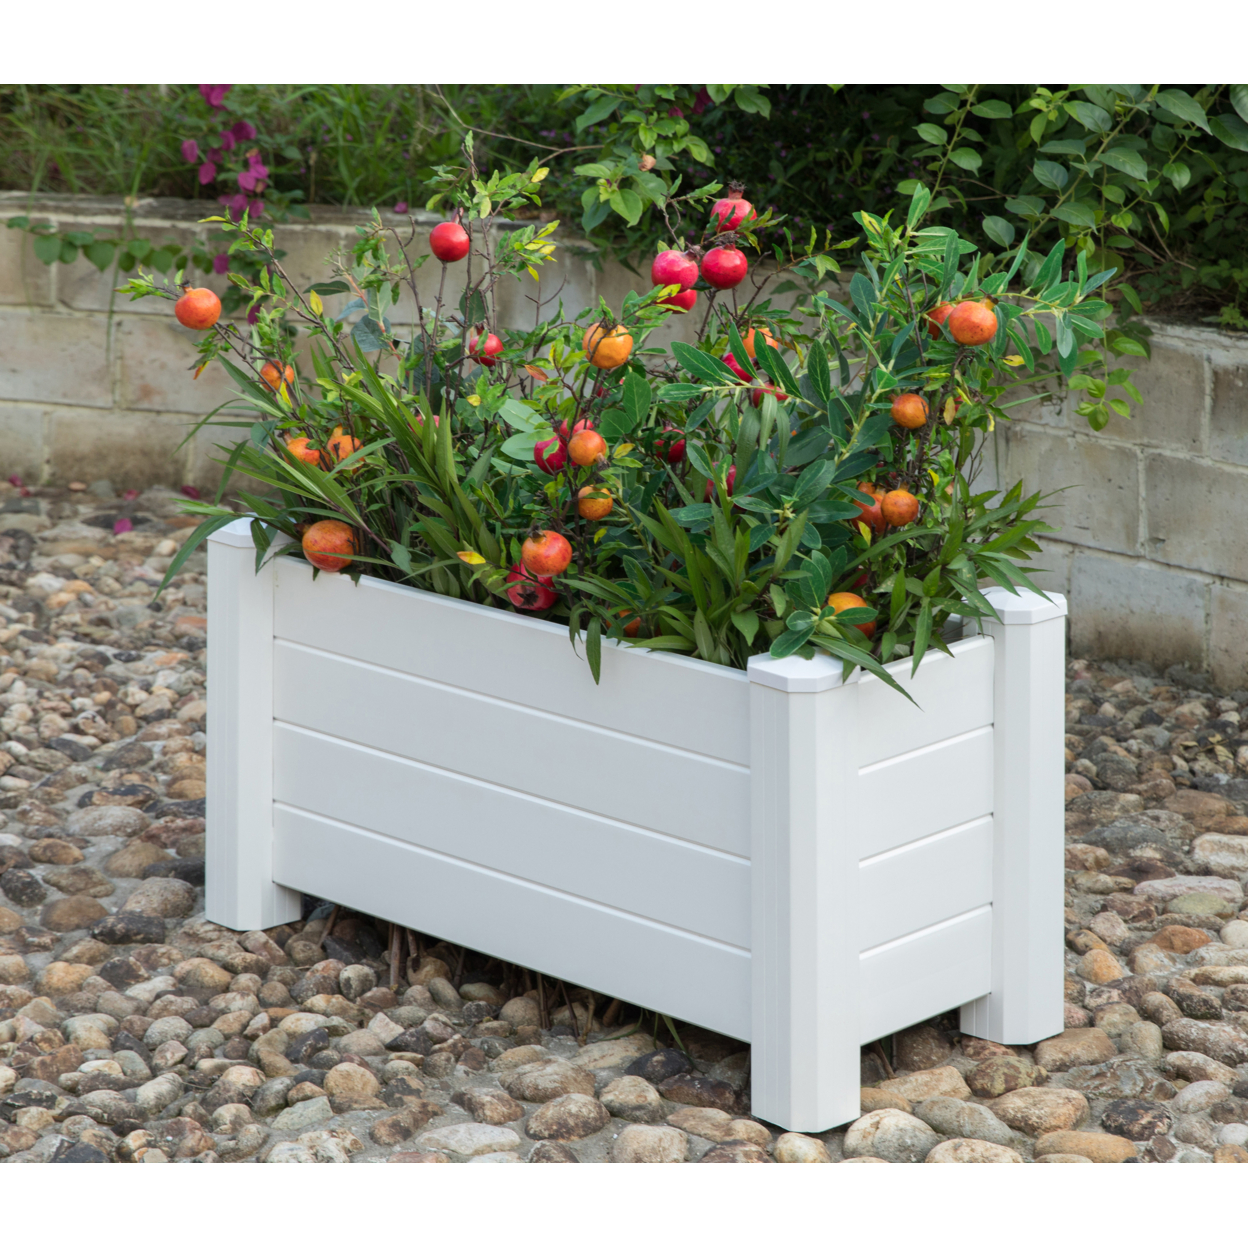 Gardenised White Vinyl Traditional Fence Design Garden Bed Elevated Screwless Raised Planter Box - 10.5 X 10.5